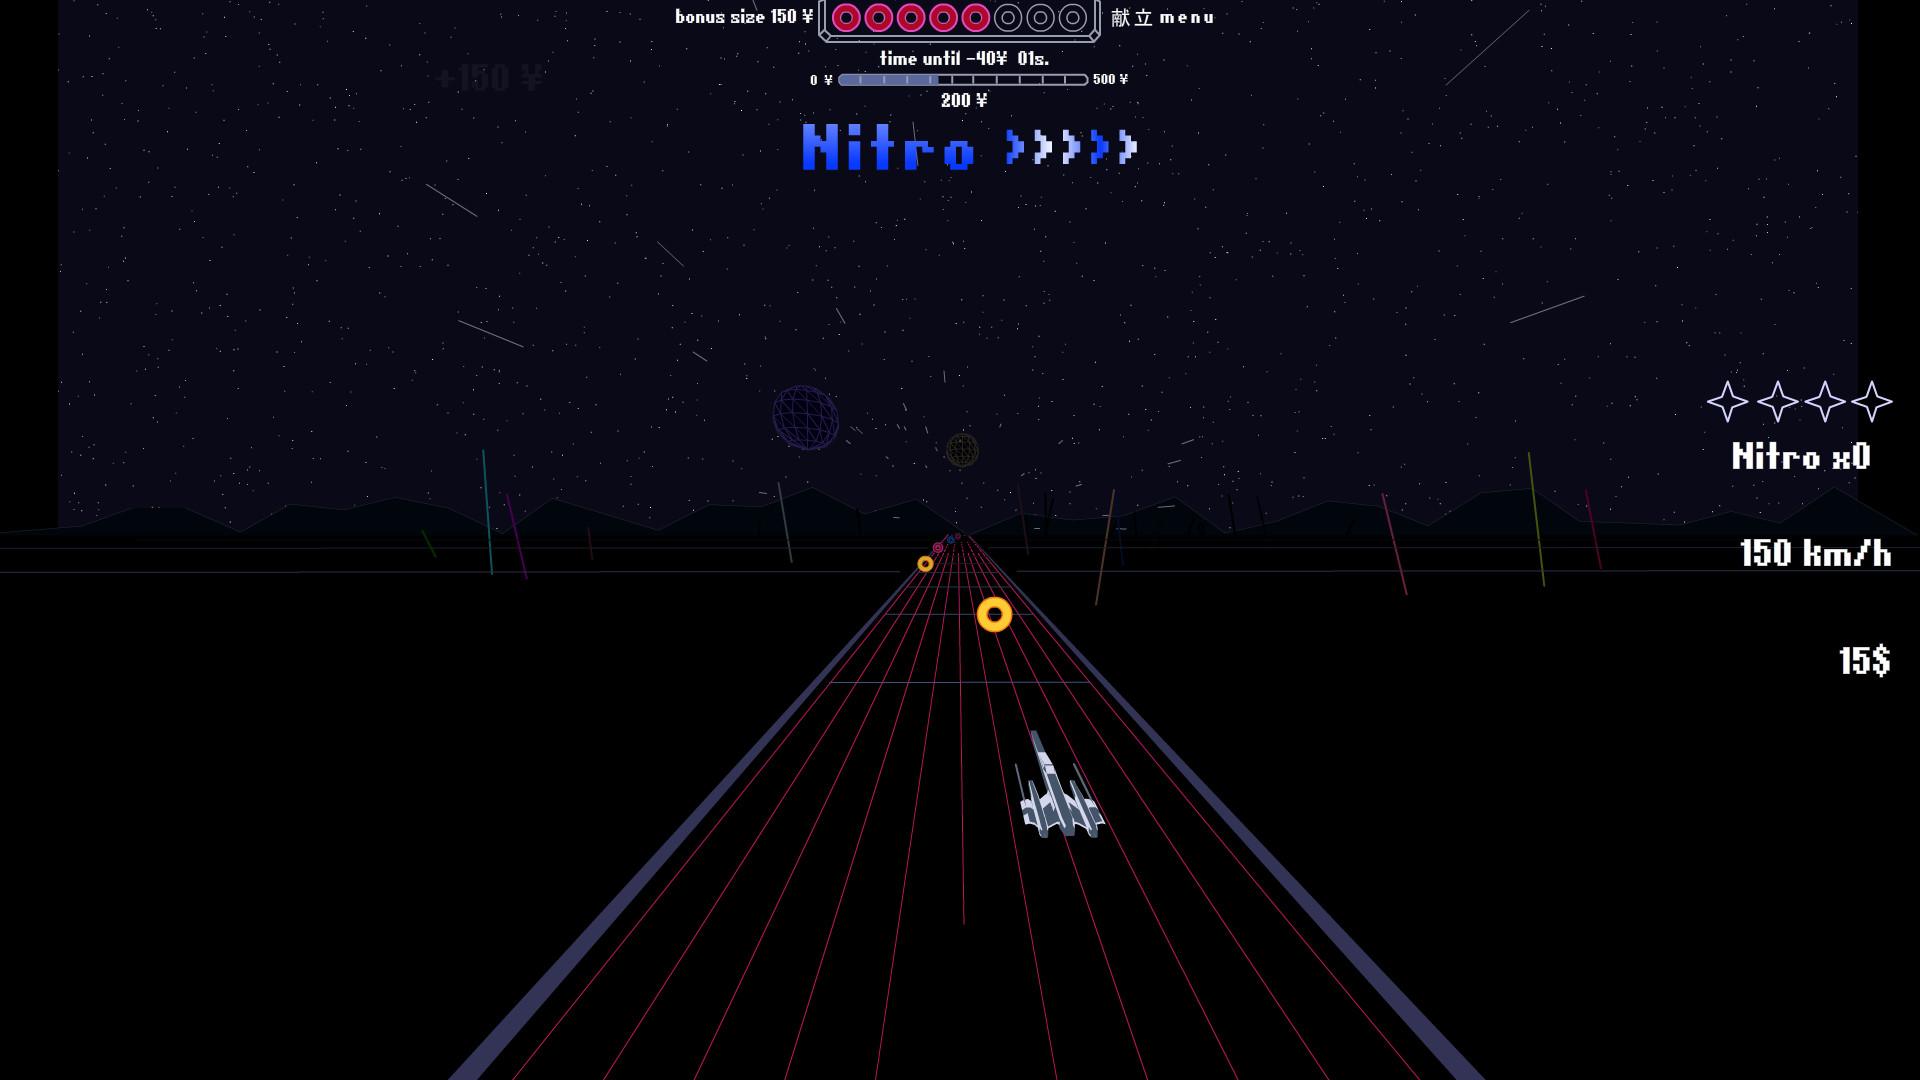 Screenshot №5 from game Star Fields